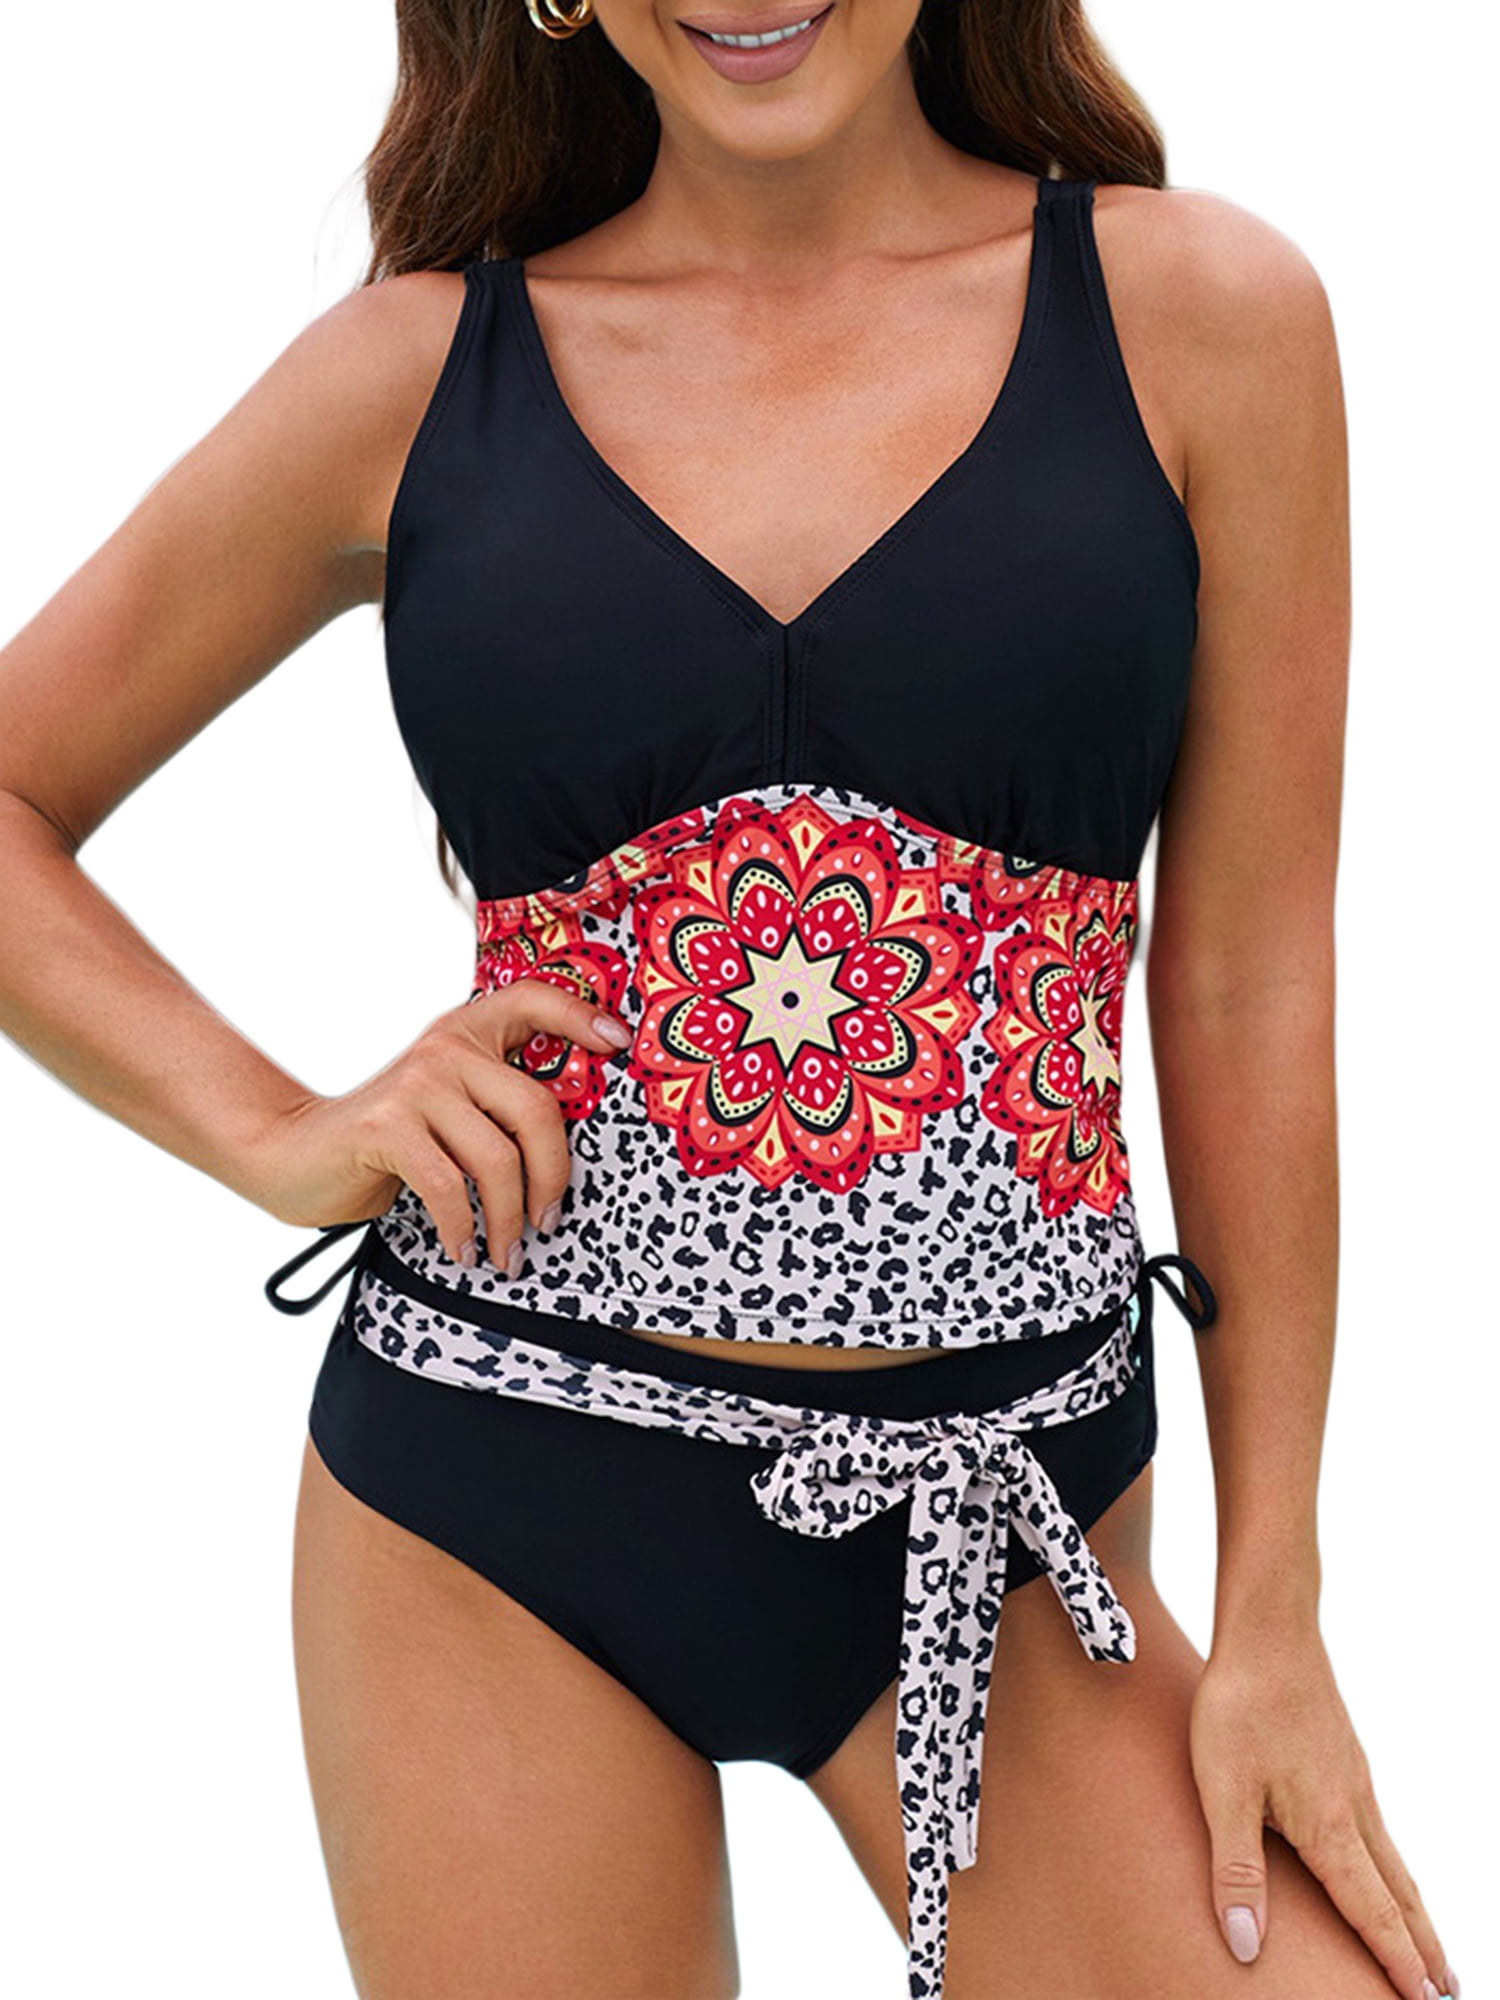 Yajiemen Womens Plus Size Tankinis Top Boho Floral Print Swimwear Bathing Suits Beachwear Swimsuit Triangle Briefs